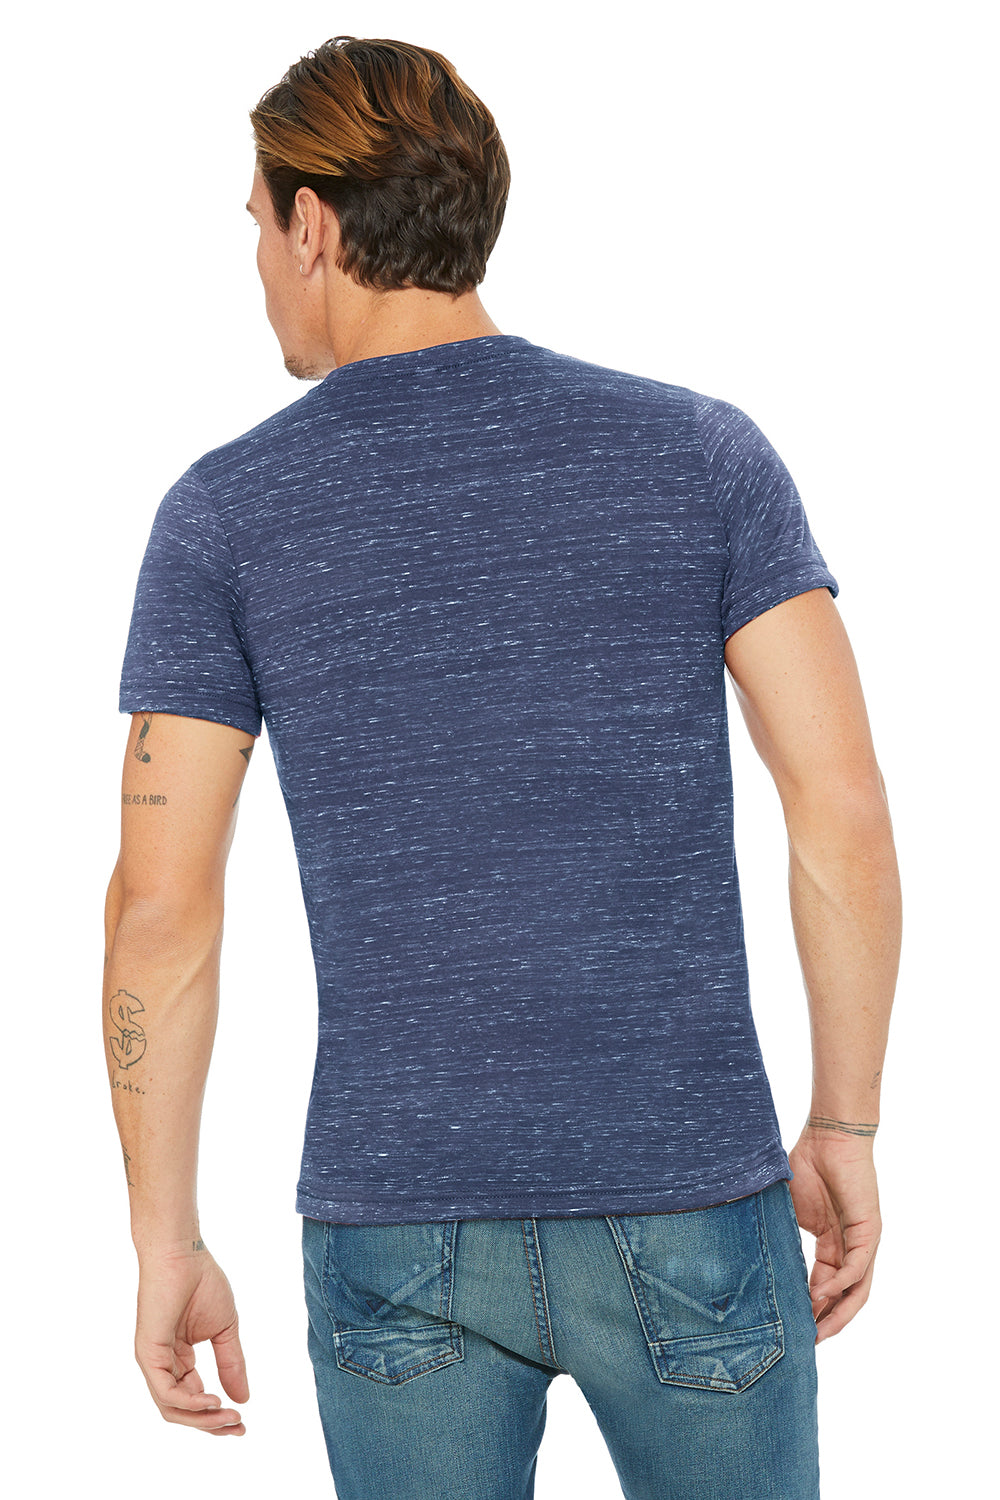 Bella + Canvas BC3005/3005/3655C Mens Jersey Short Sleeve V-Neck T-Shirt Navy Blue Marble Model Back